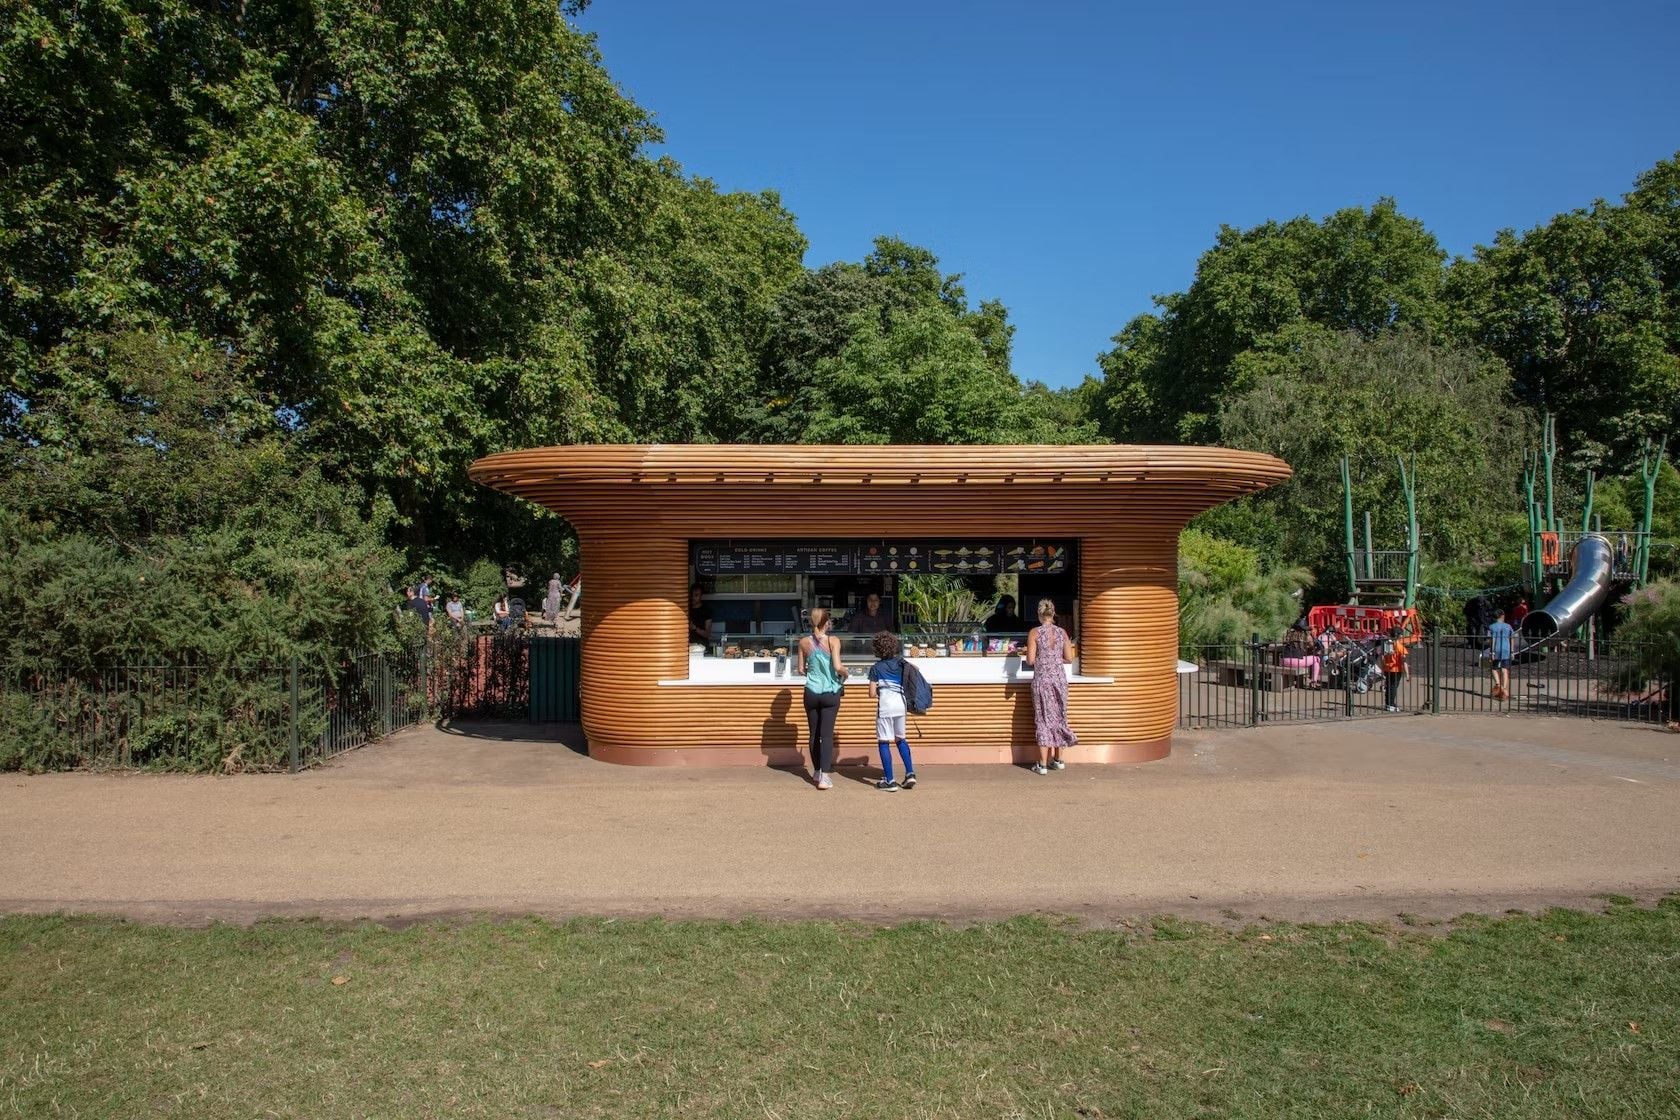 A Mizzi Studio-designed refreshment kiosk near a playground in one of London